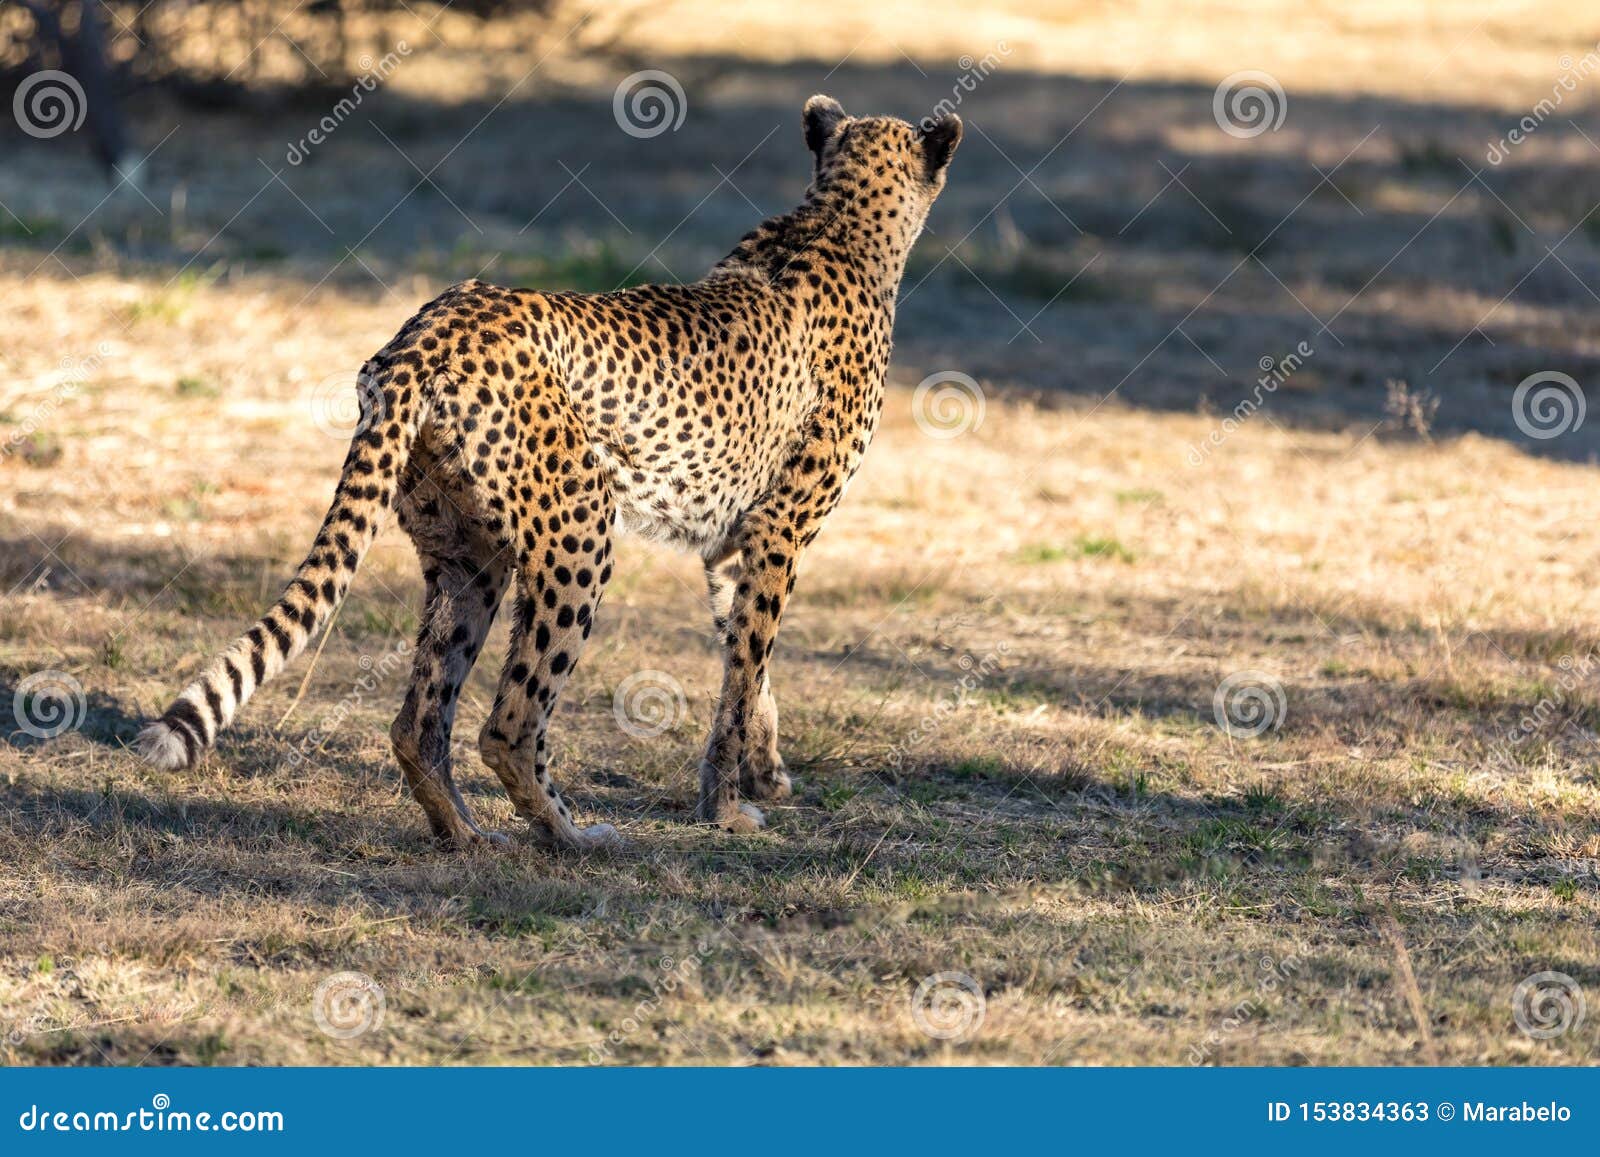 cheetah running in south africa, acinonyx jubatus.